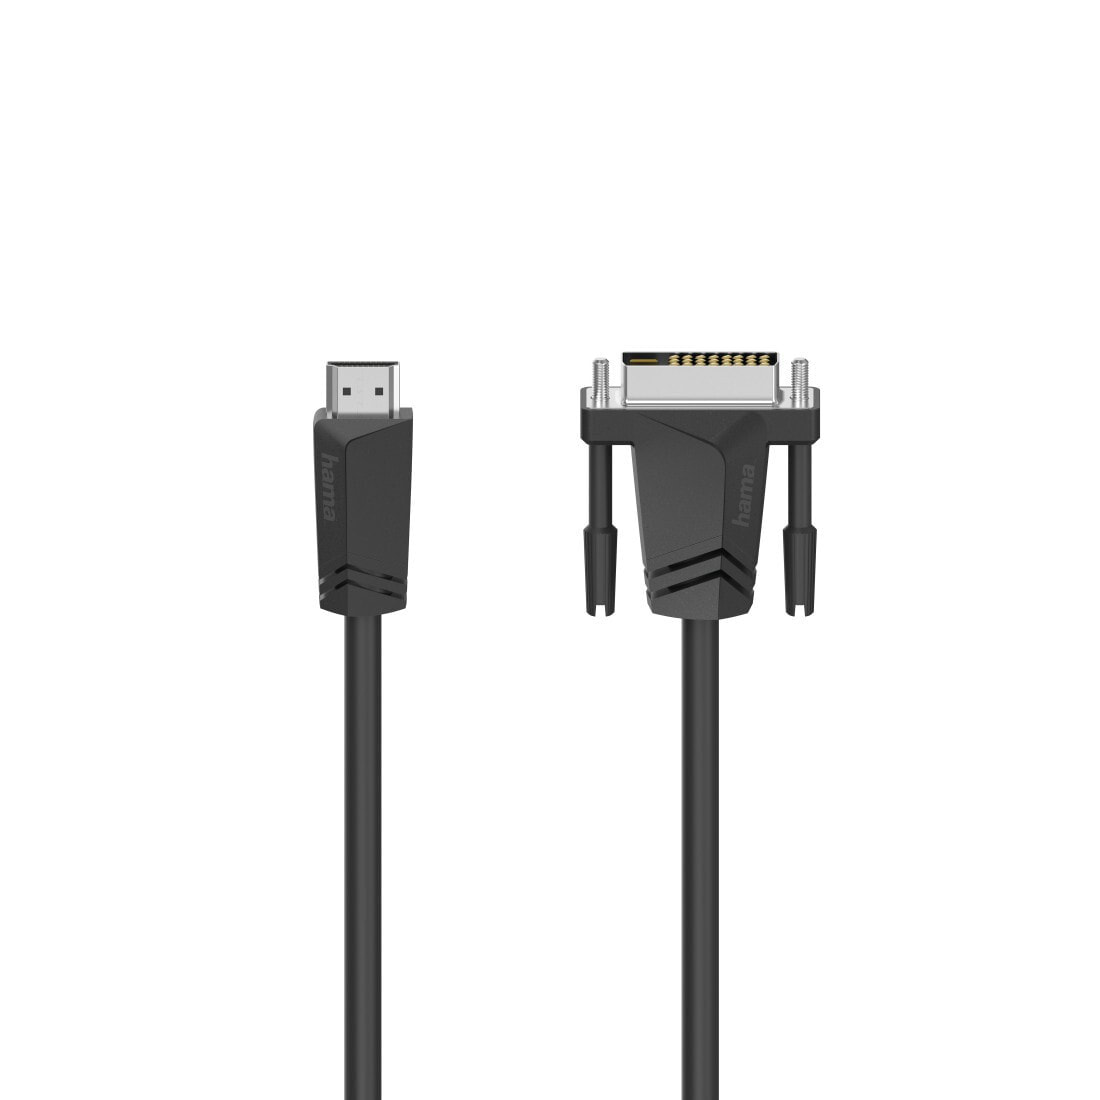 Hama 00205018 видео кабель адаптер 1,5 m HDMI Тип A (Стандарт) DVI-D Черный